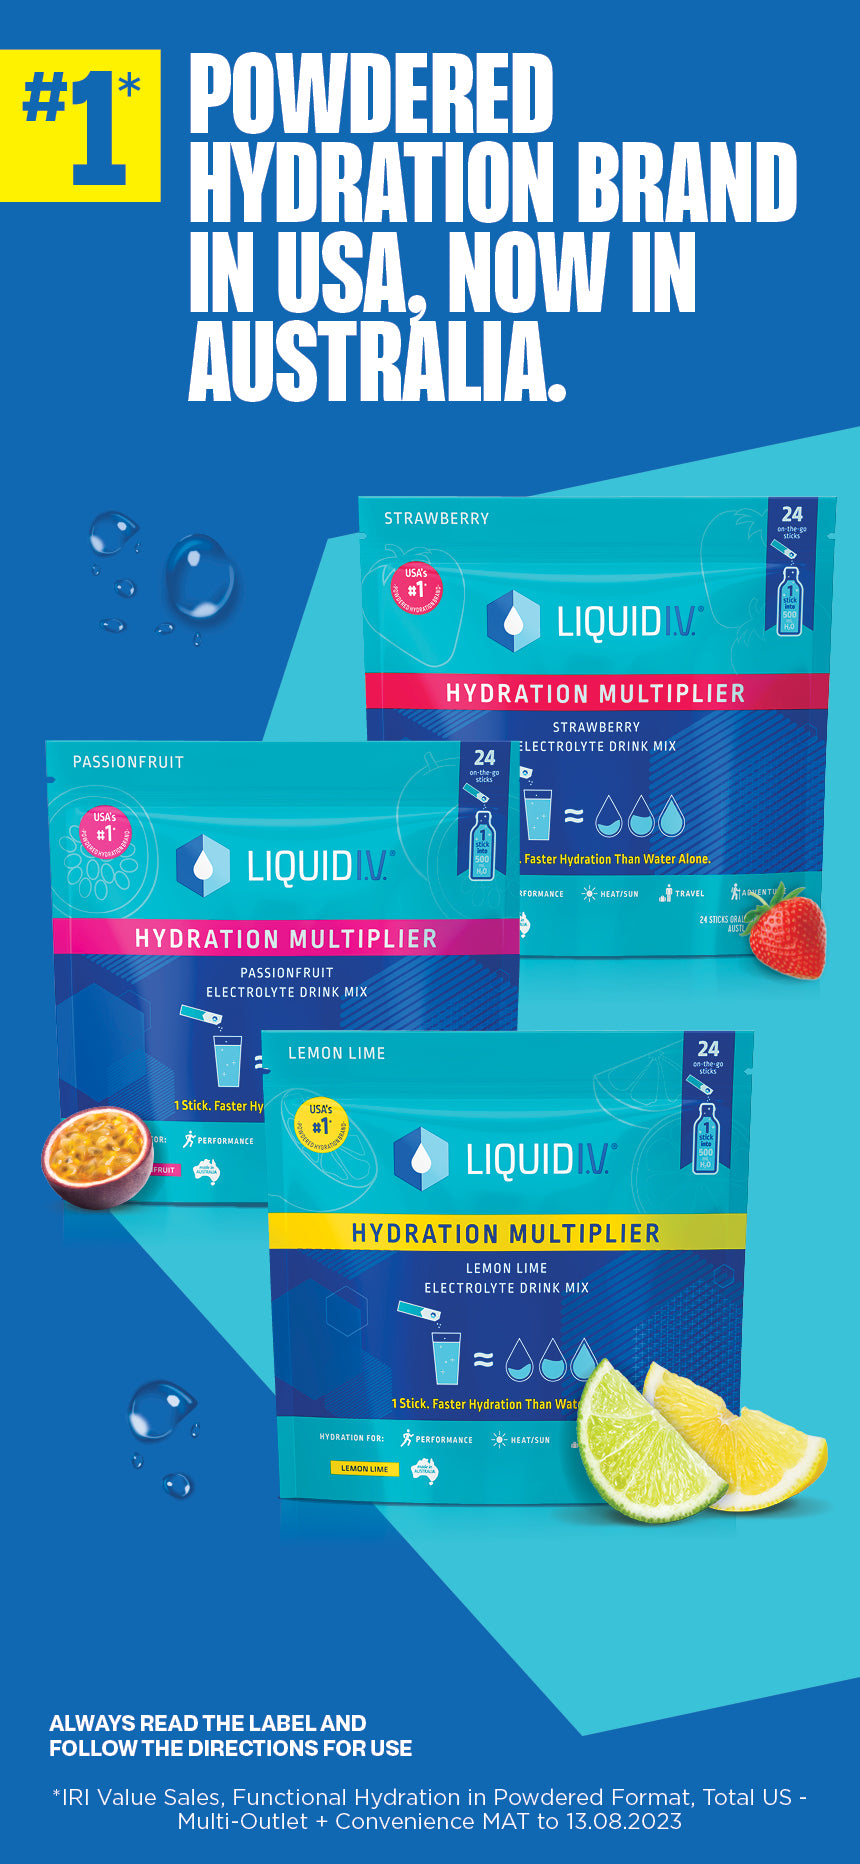 Liquid IV Mobile Banner Image